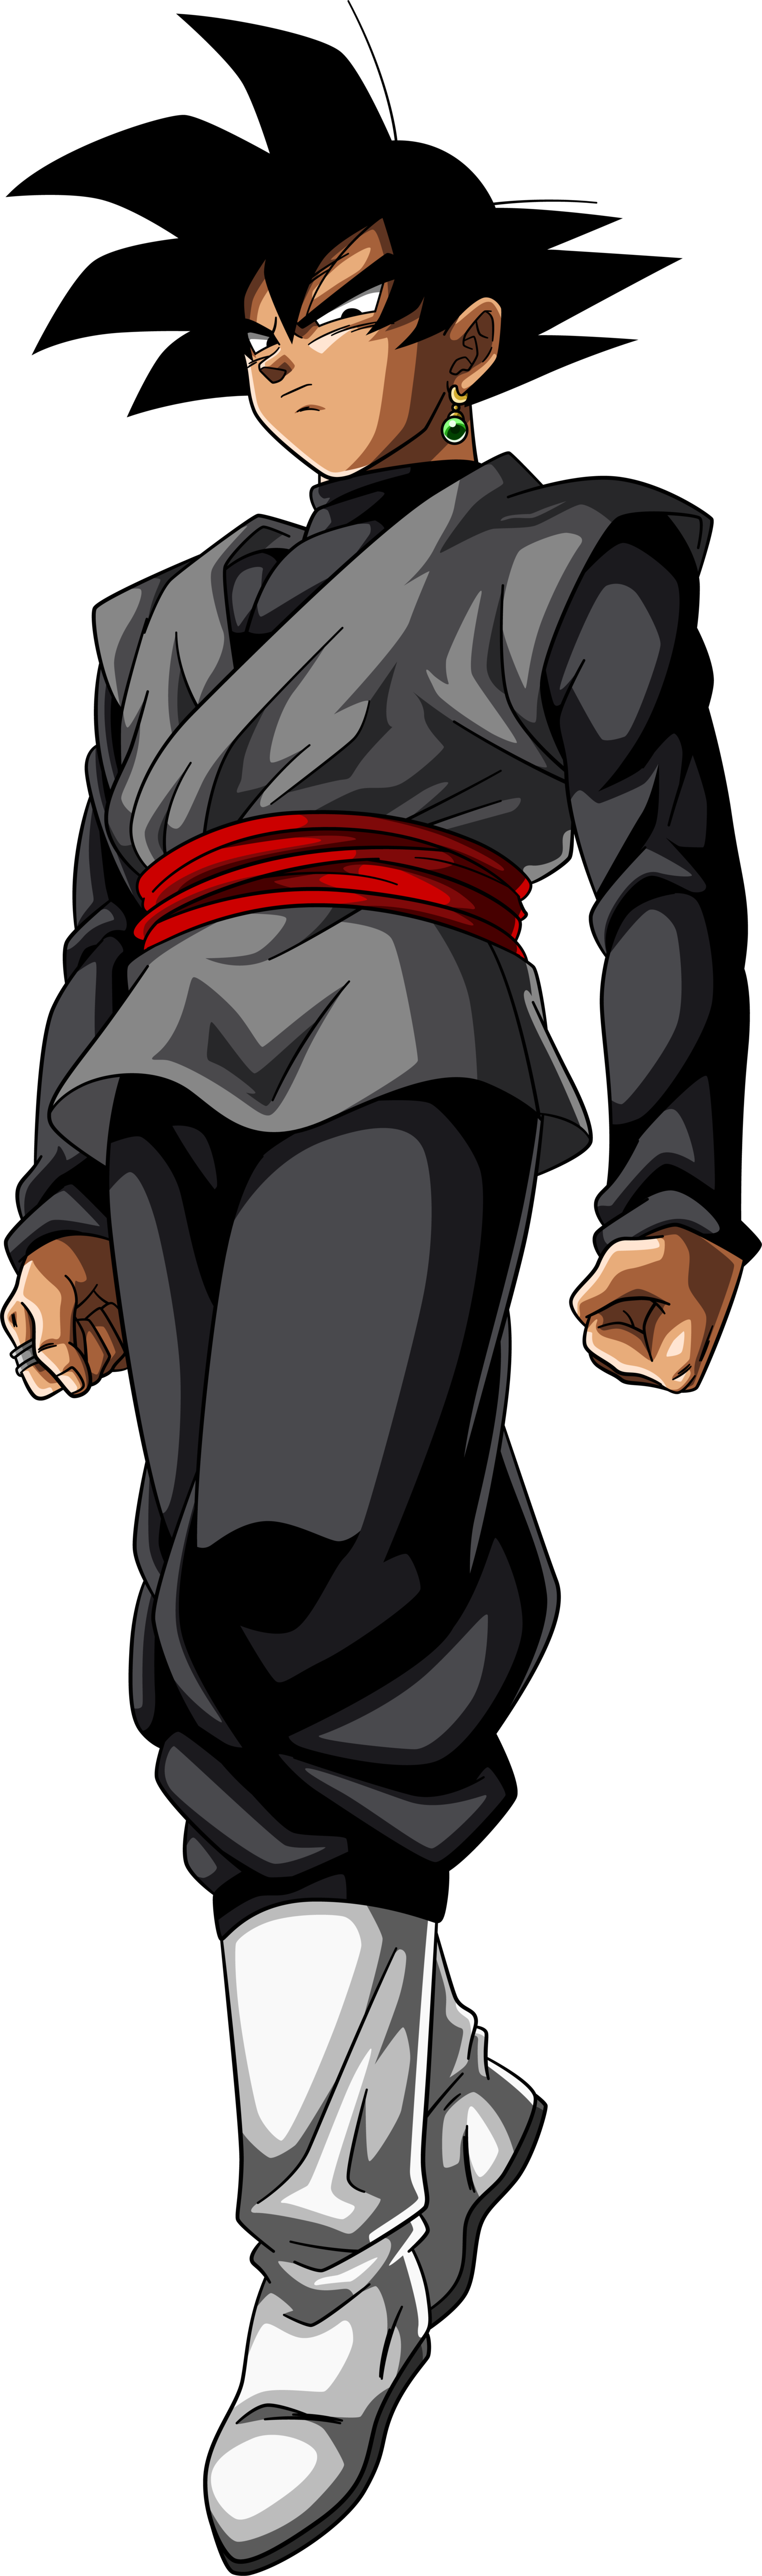 Goku Black (Canon)/Paleomario66 | Character Stats and ...